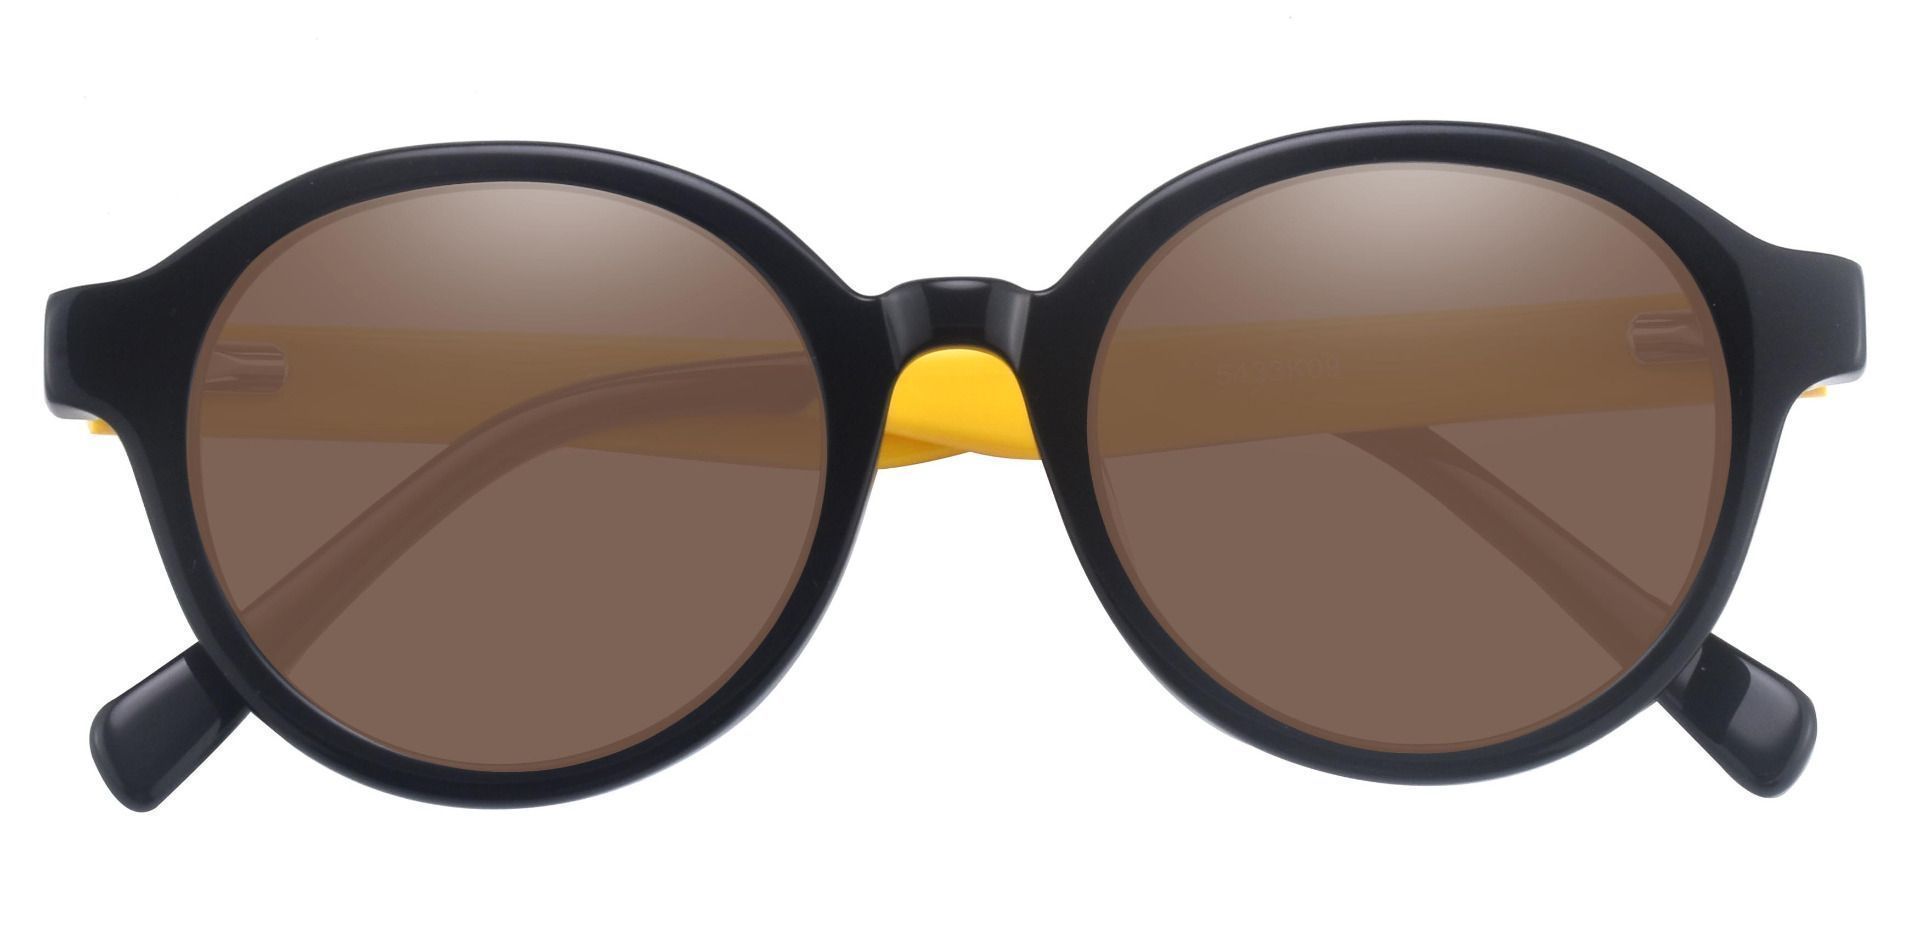 Steel City Round Progressive Sunglasses - Black Frame With Brown Lenses